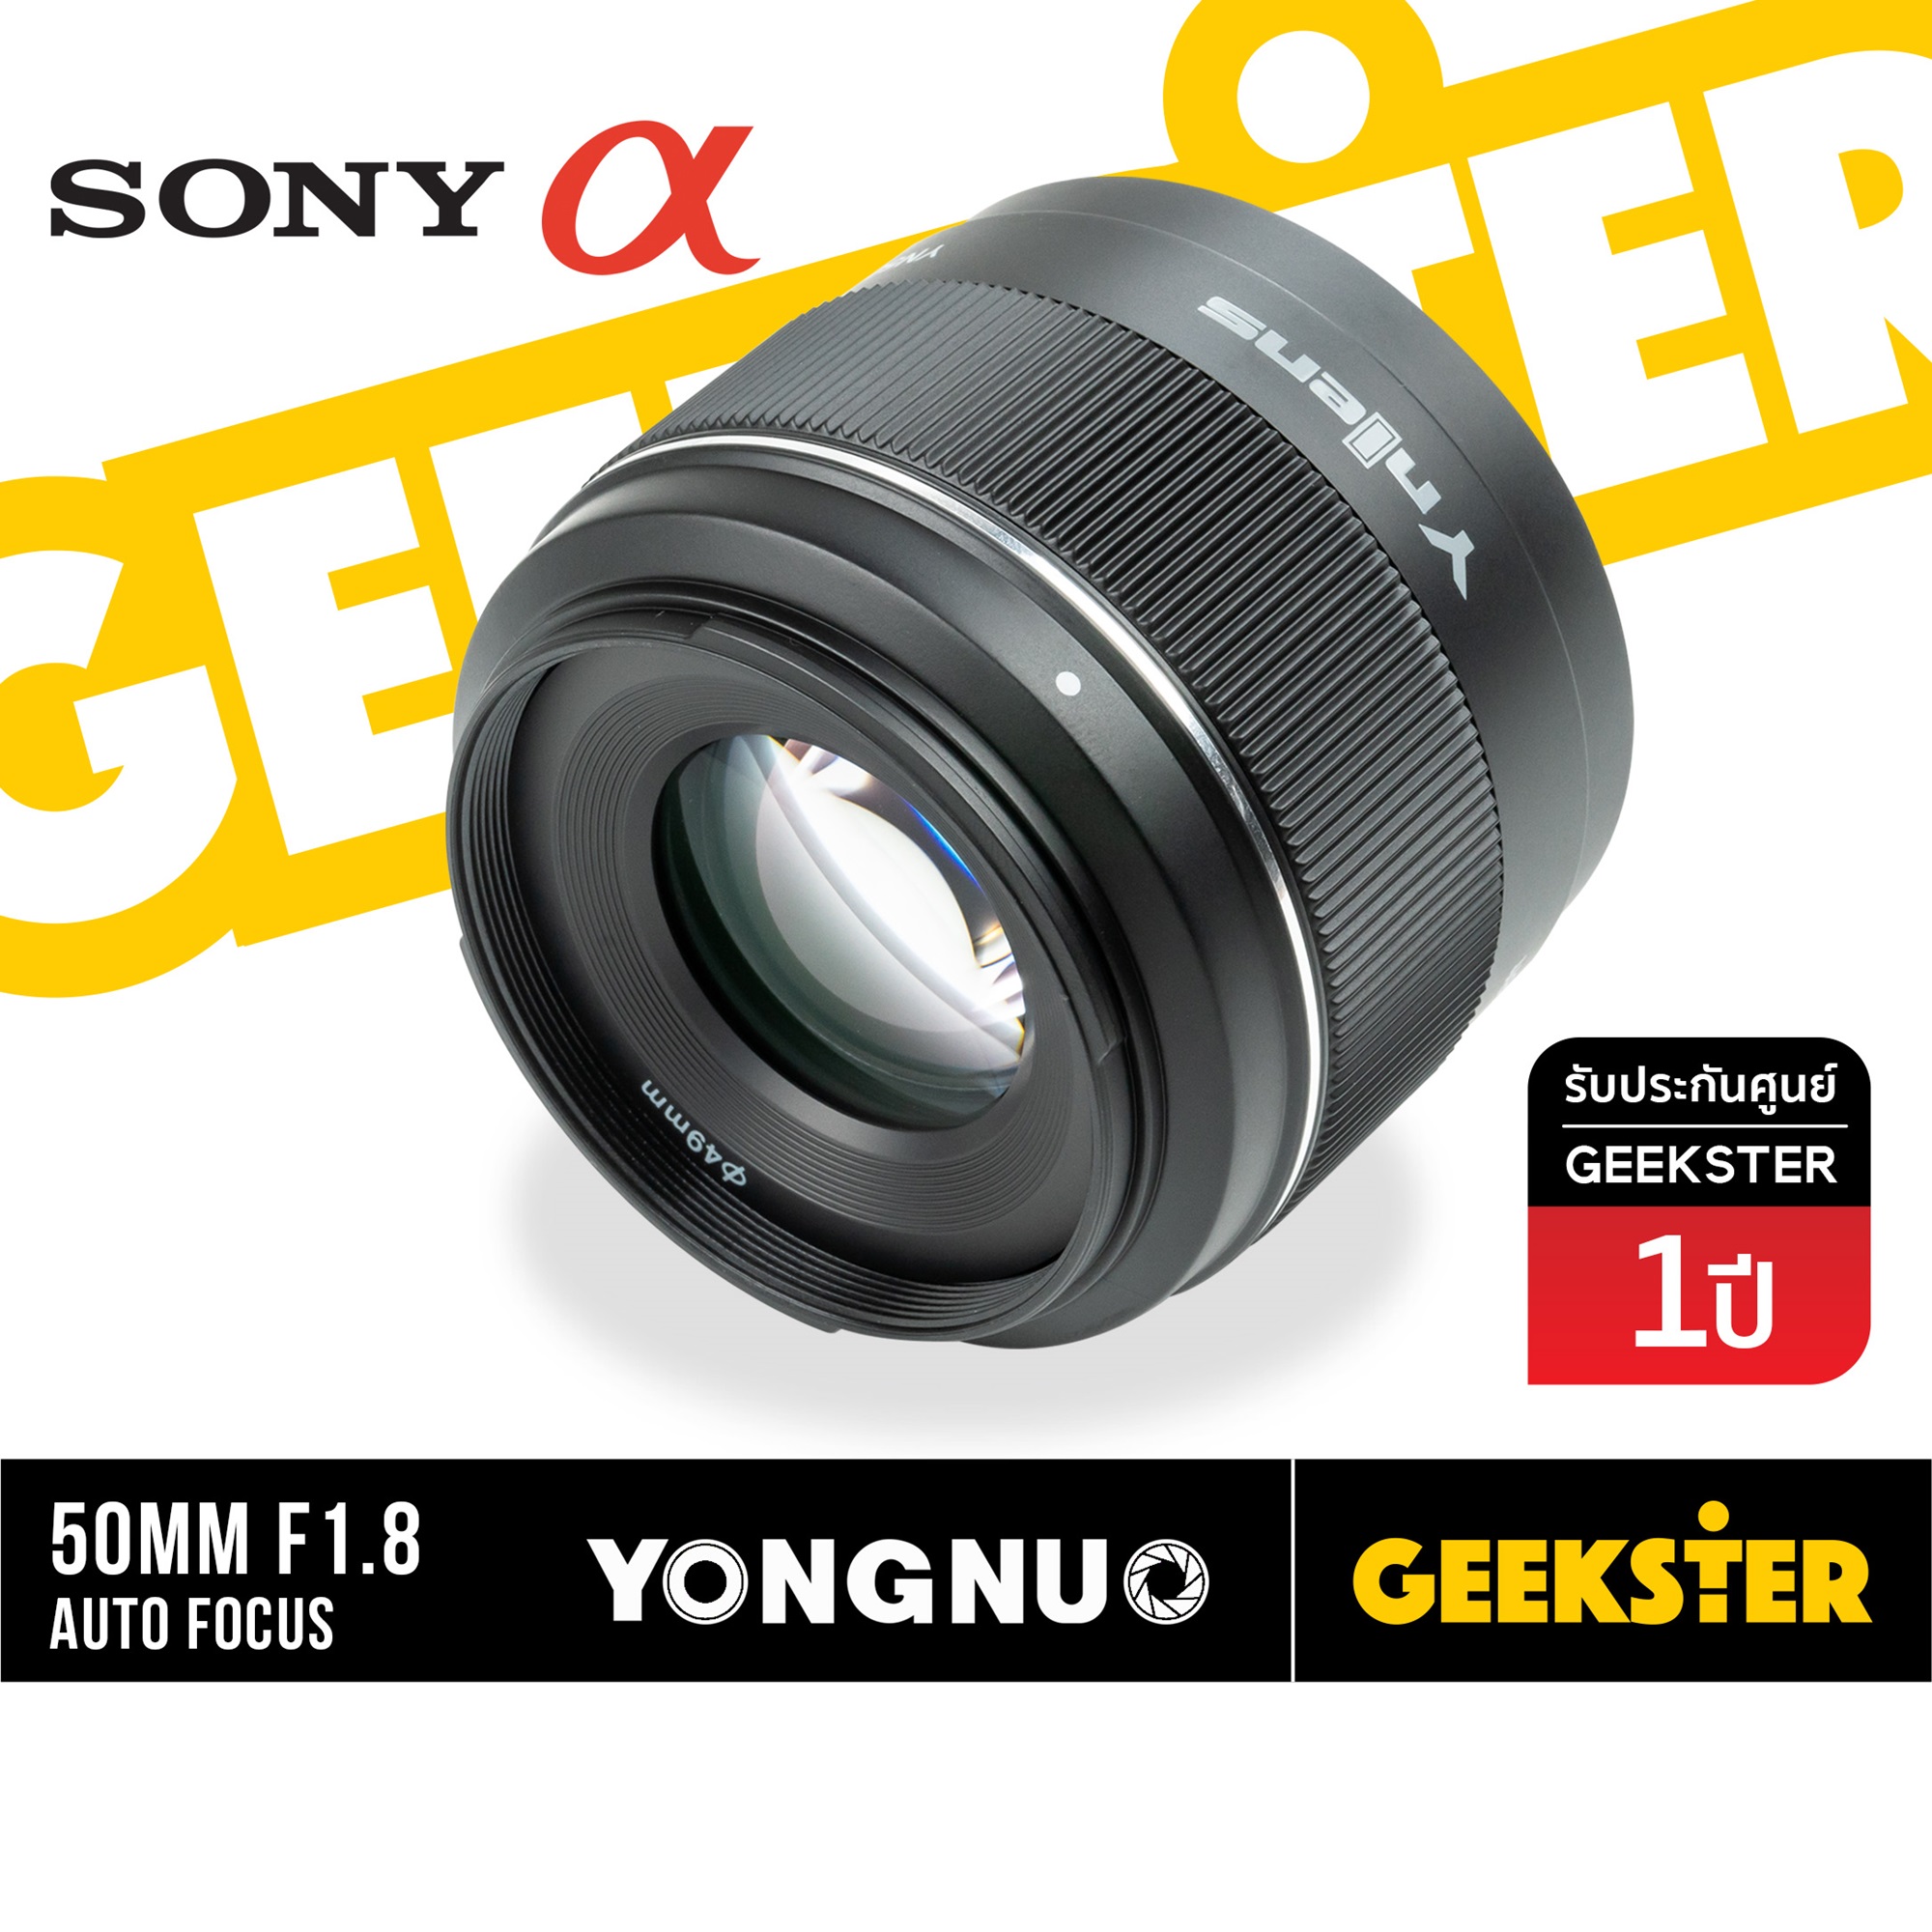 Yongnuo 50mm f1.8 DA DSM SONY เลนส์ออโต้โฟกัส สำหรับใส่กล้อง Sony Mirrorless ได้ทุกรุ่น ( YN AUTO FOCUS Lens 50 mm F 1.8 ) ( AF / MF ) ( เลนส์ละลาย ) ( หน้าชัดหลังเบลอ ) ( สำหรับ กล้อง Sony  ) ( เมาท์ E , FE , NEX Mount YN50mm ) ( ออโตโฟกัส ) ( Geekster )